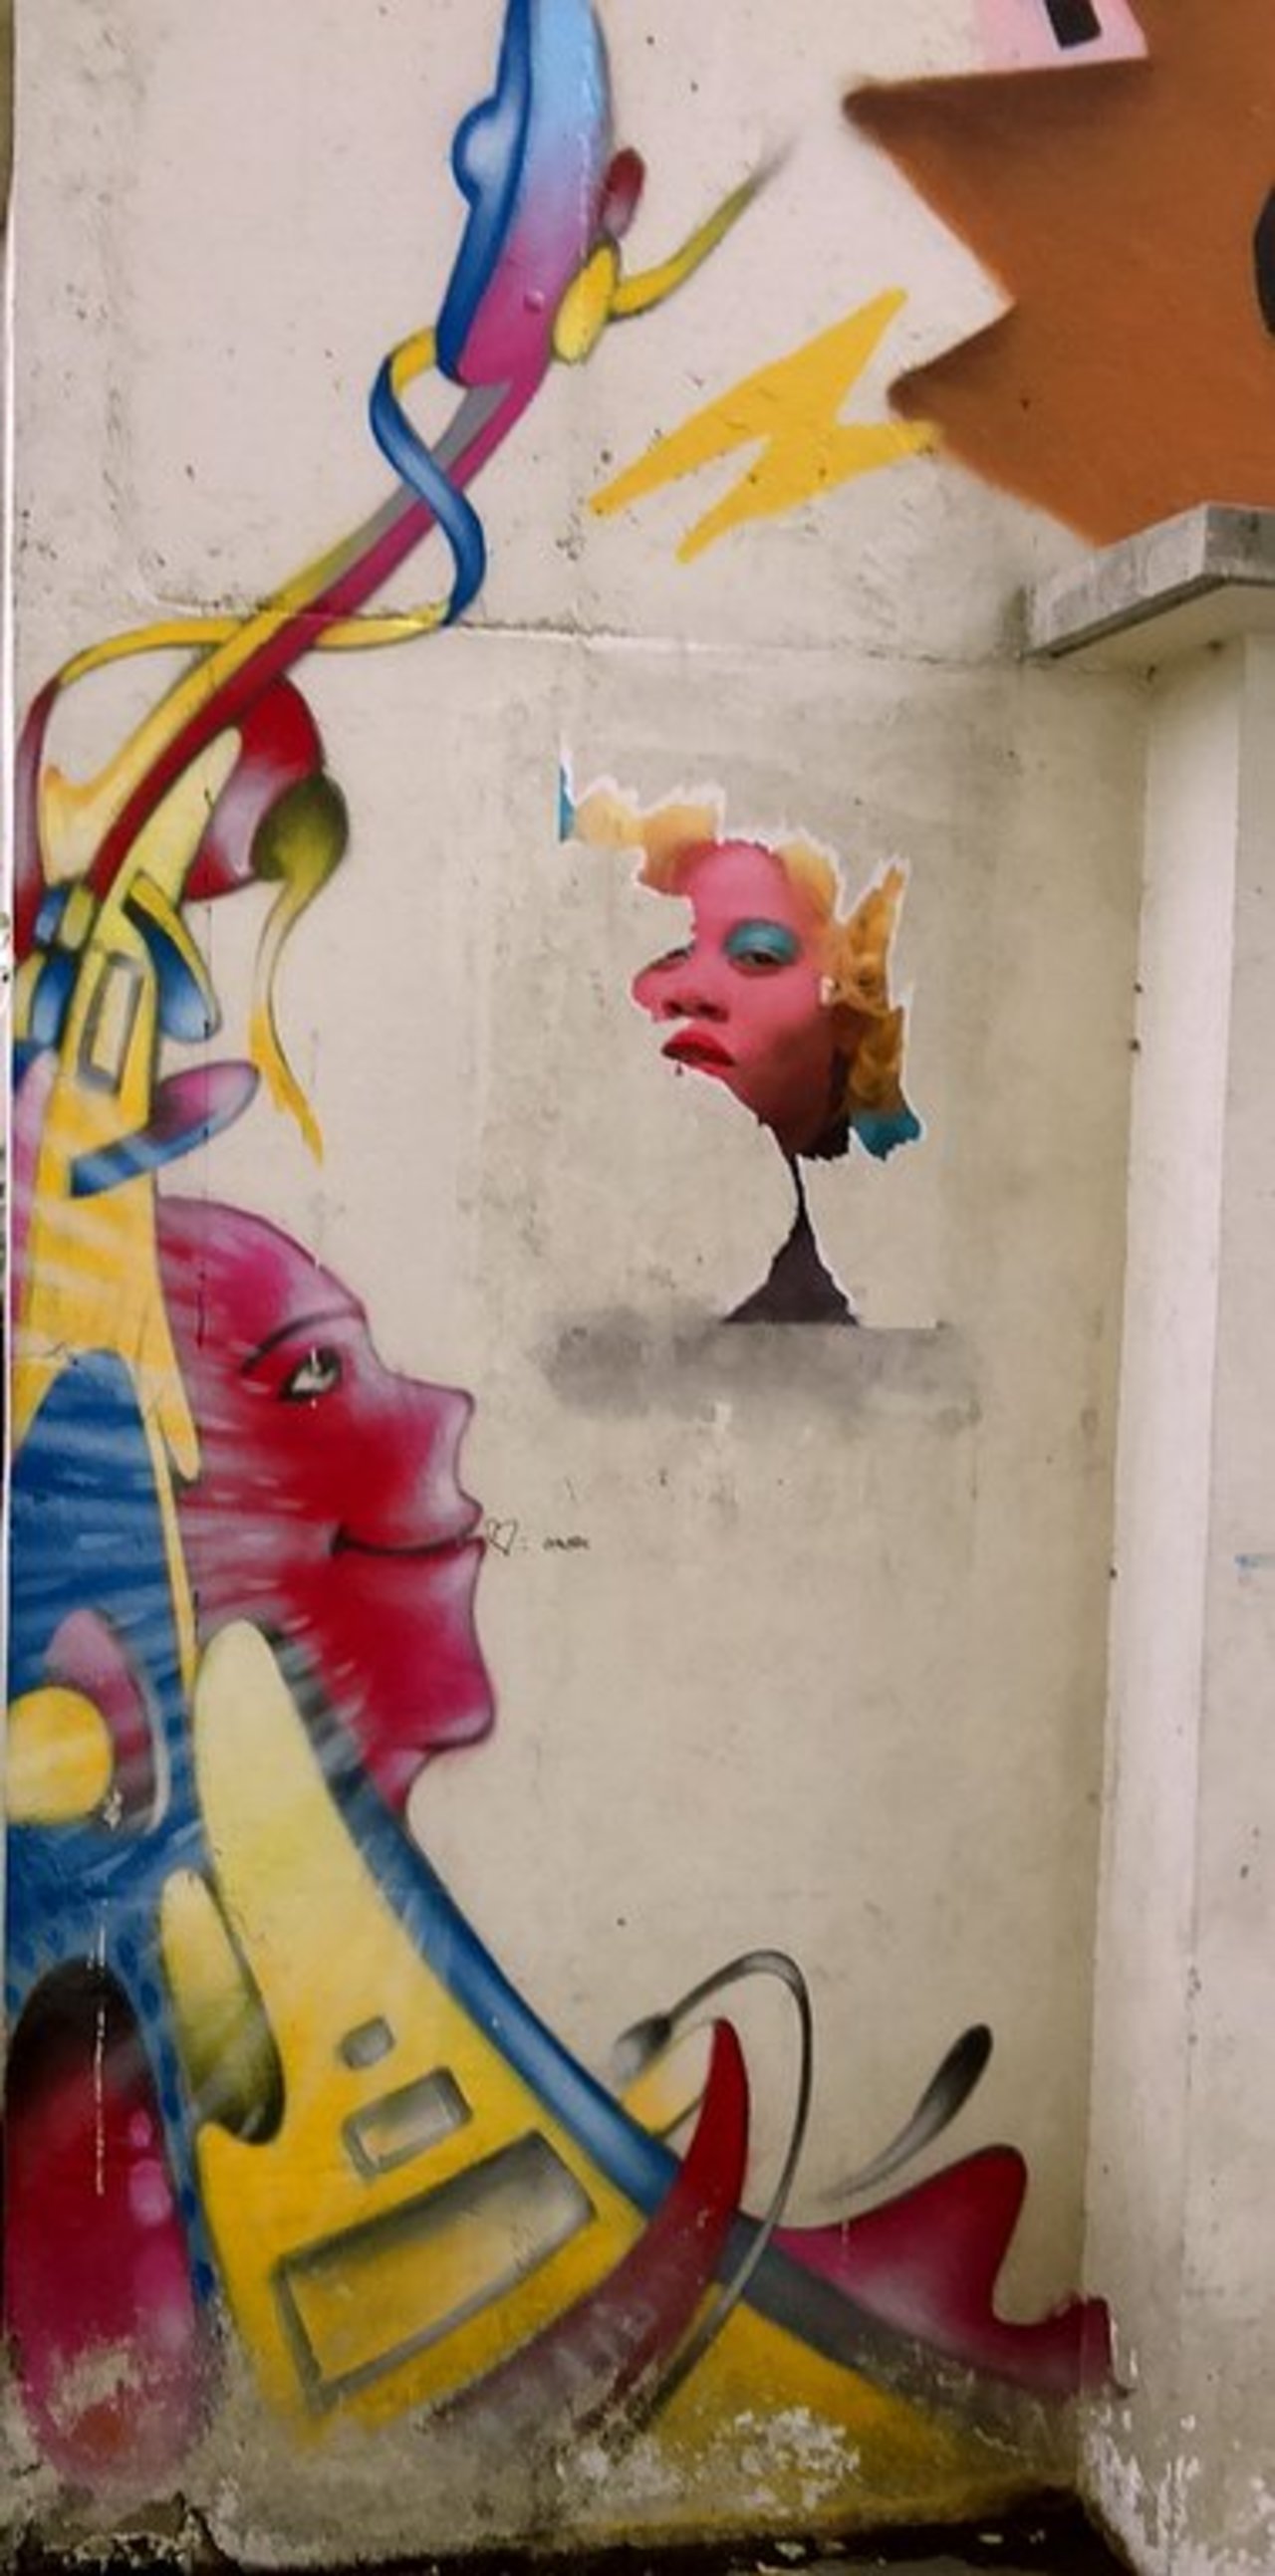 Street Art by anonymous in #Vitry-sur-Seine http://www.urbacolors.com #art #mural #graffiti #streetart https://t.co/MtM6izXHc3